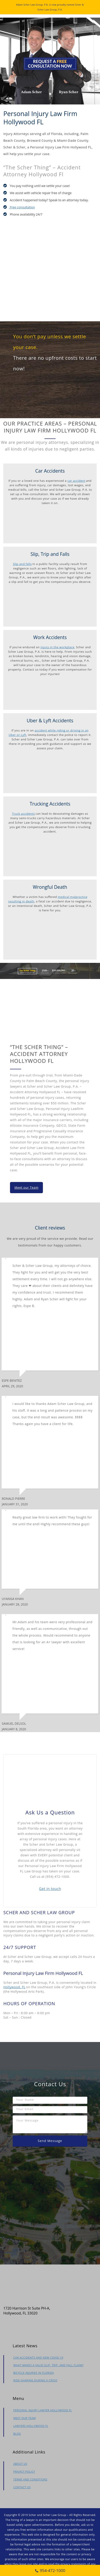 Adam Scher Law Group - Hollywood FL Lawyers